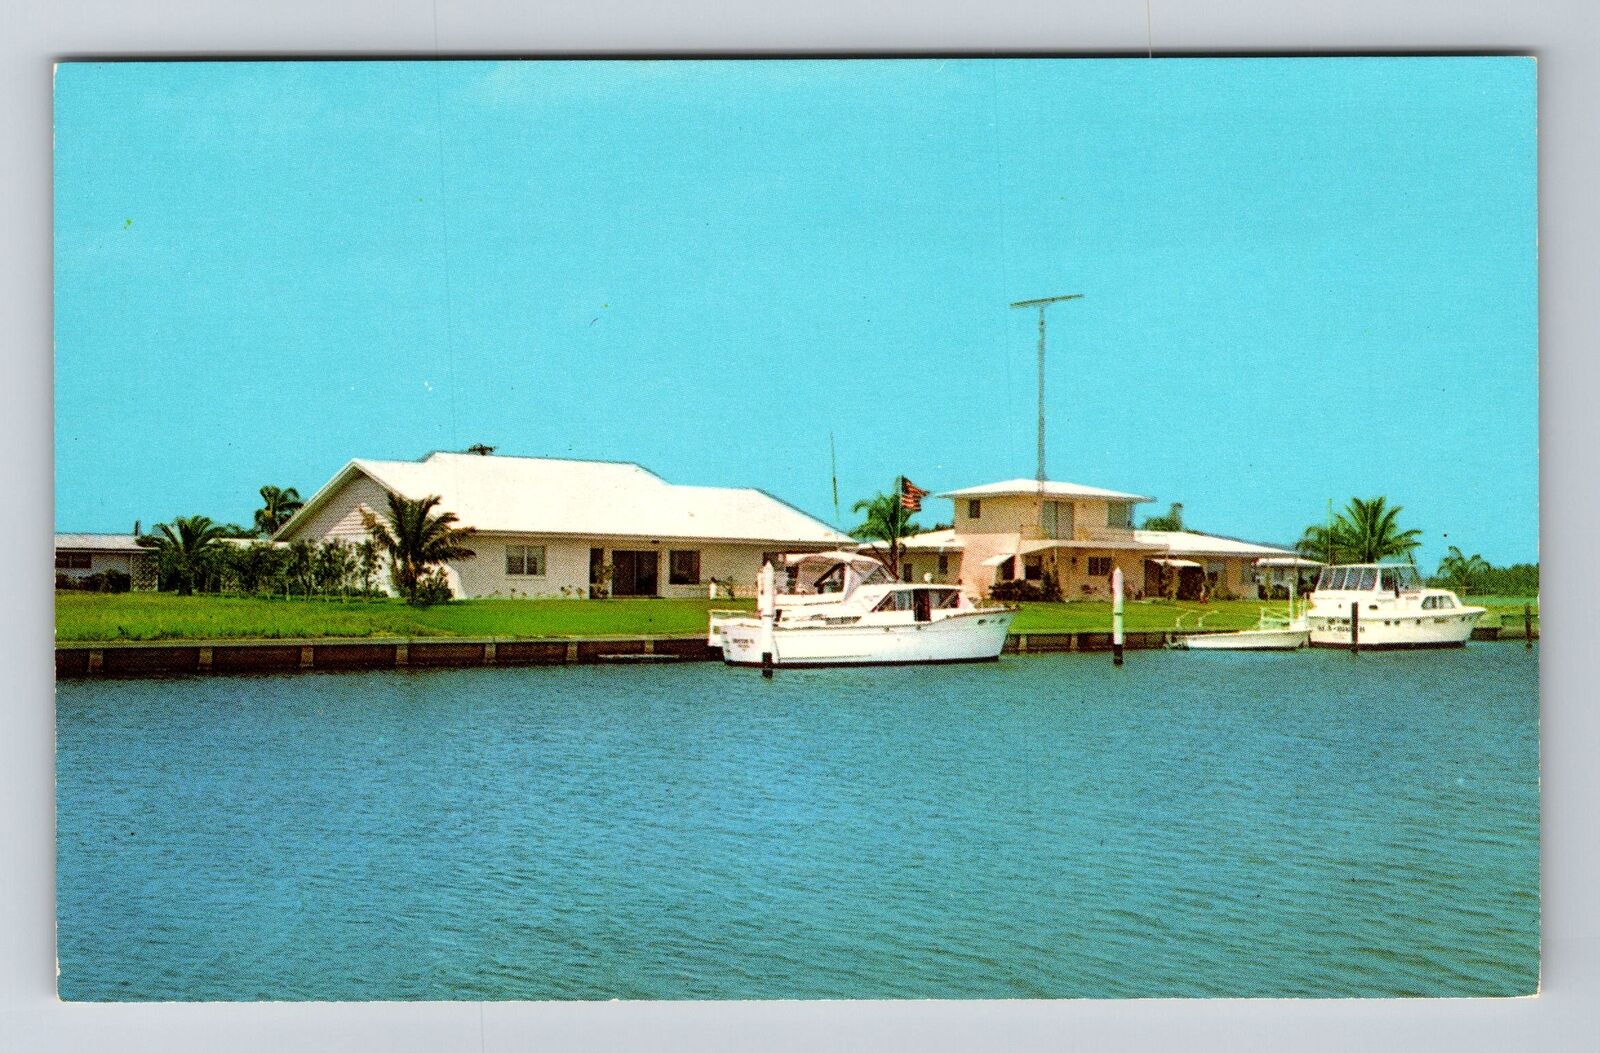 Vero Beach FL-Florida, Waterfront Homes And Yachts, Vintage Postcard